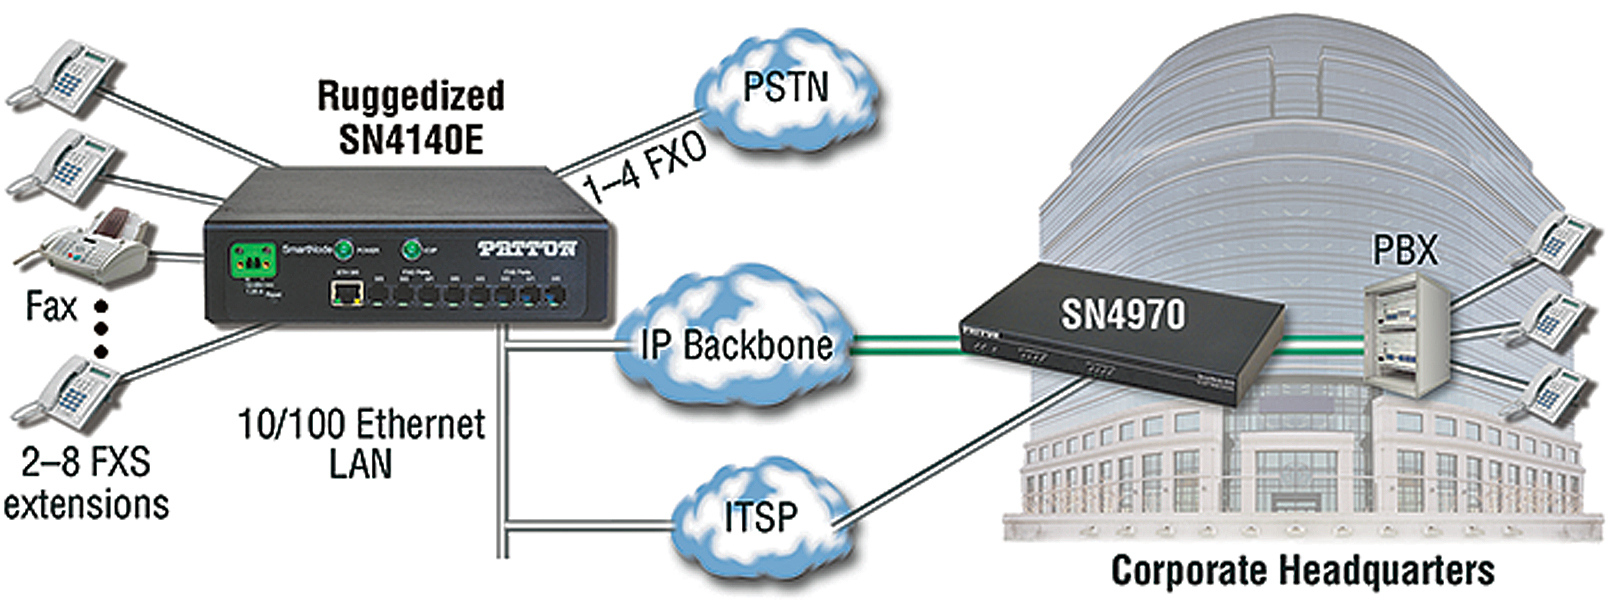 Patton Electronics ruggedized SN4140E Industrial VoIP Gateway 